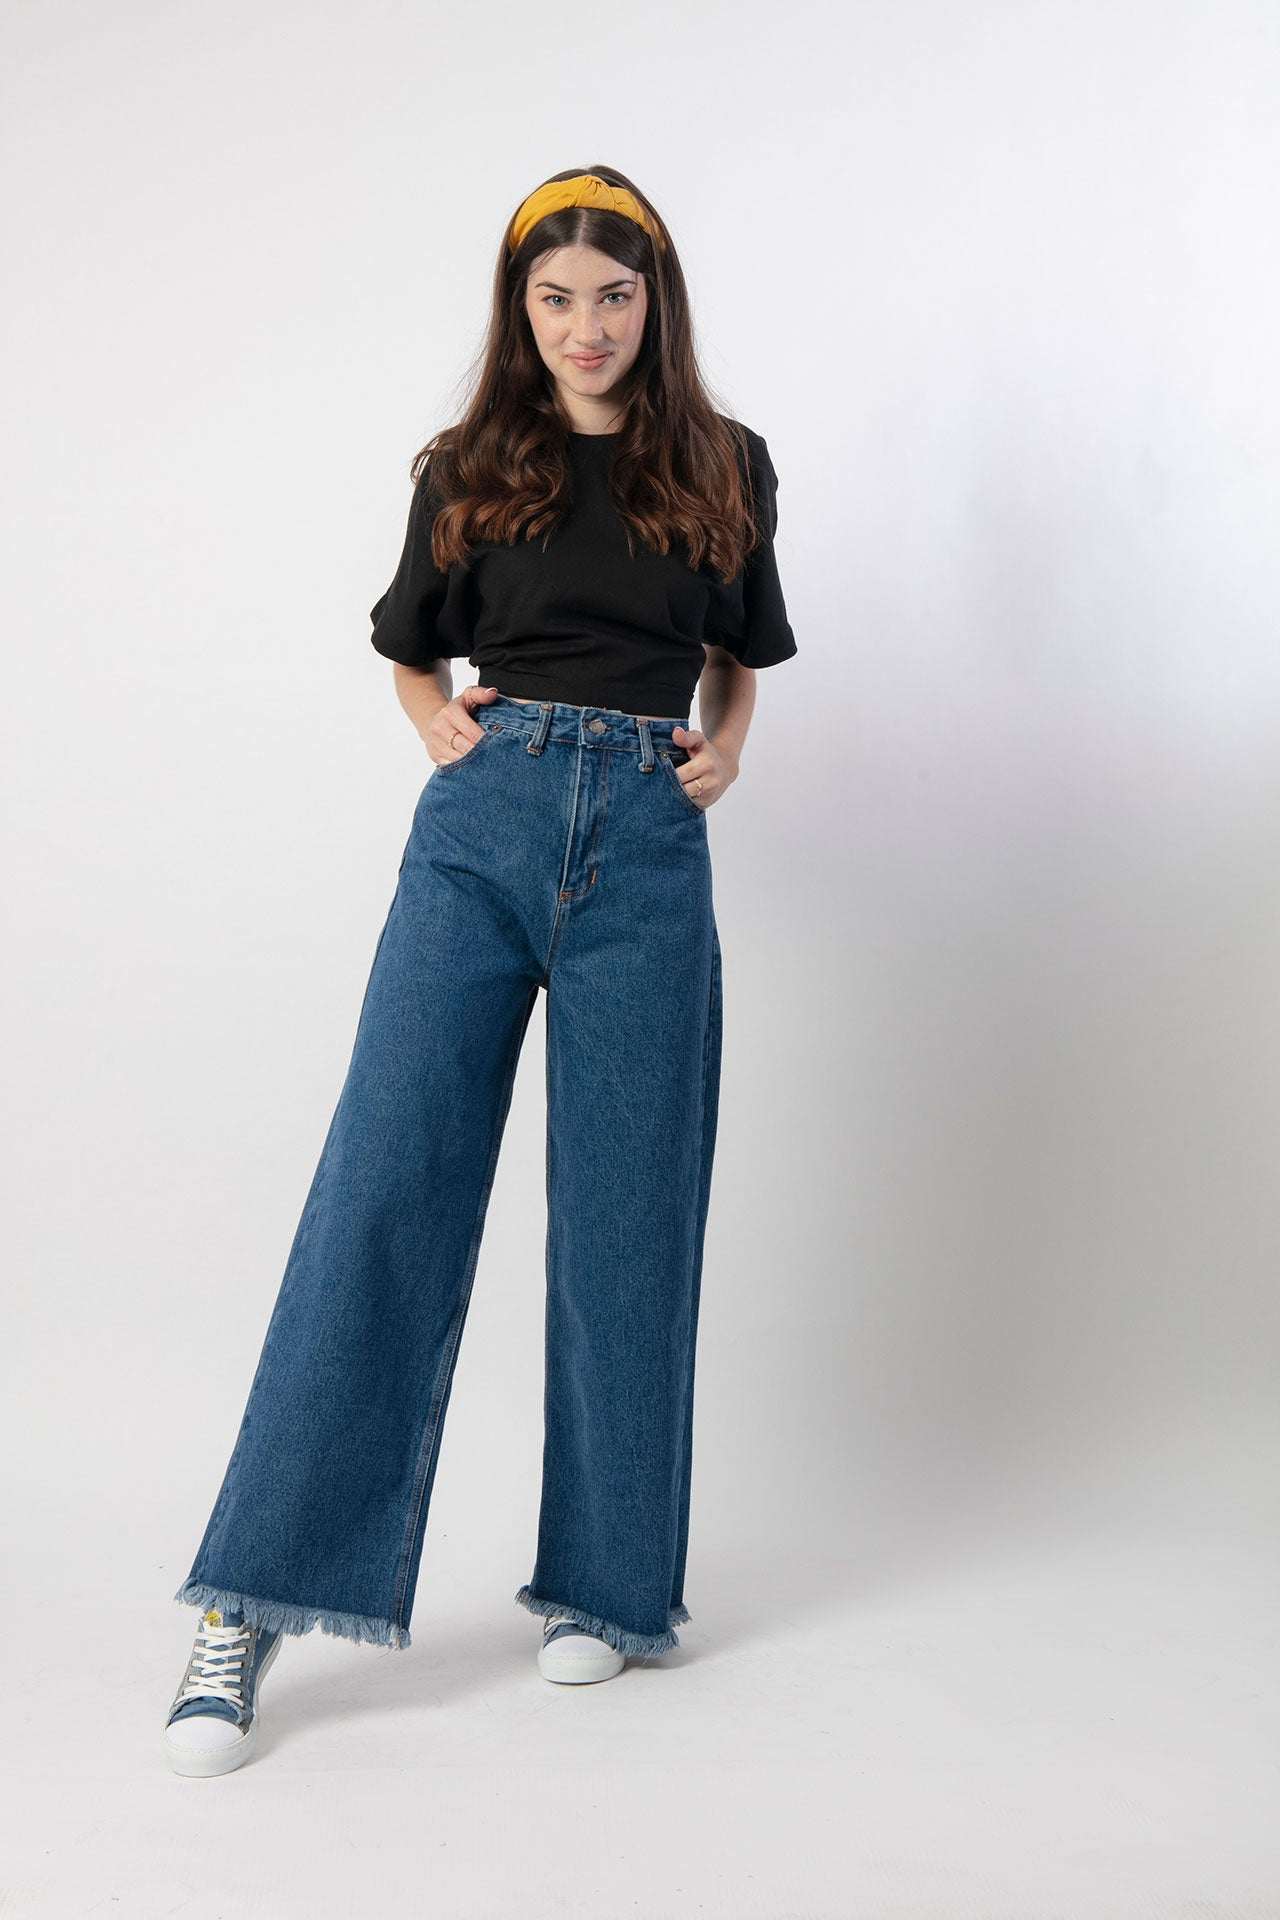 Corredor Digno dramático Women's High Waisted Jeans - Bustins Jeans